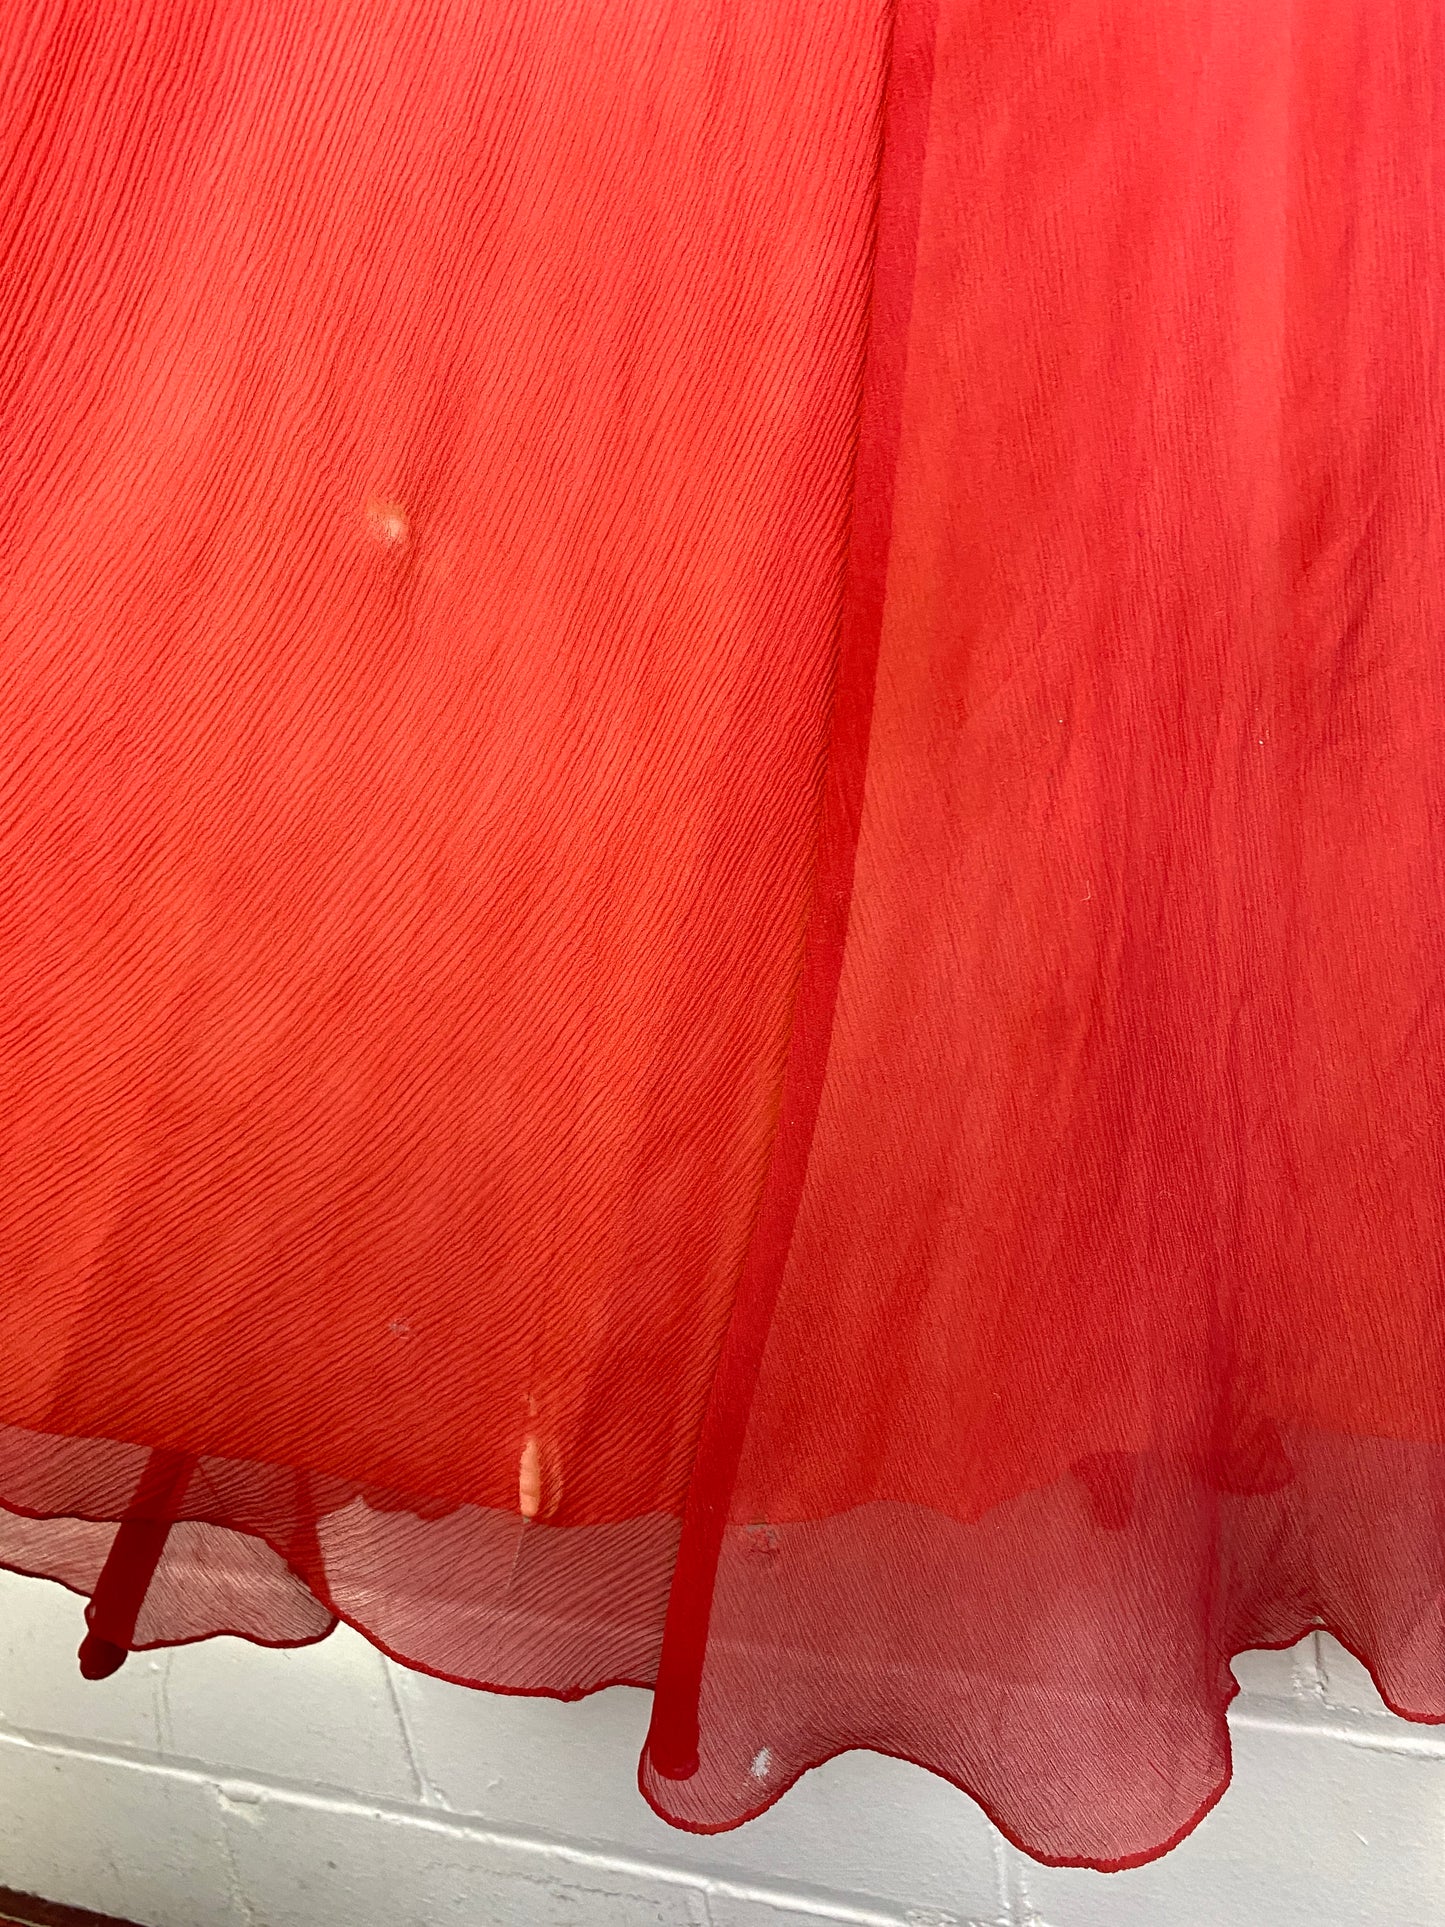 Vintage 1930s Pink Chiffon Evening Gown, Medium 